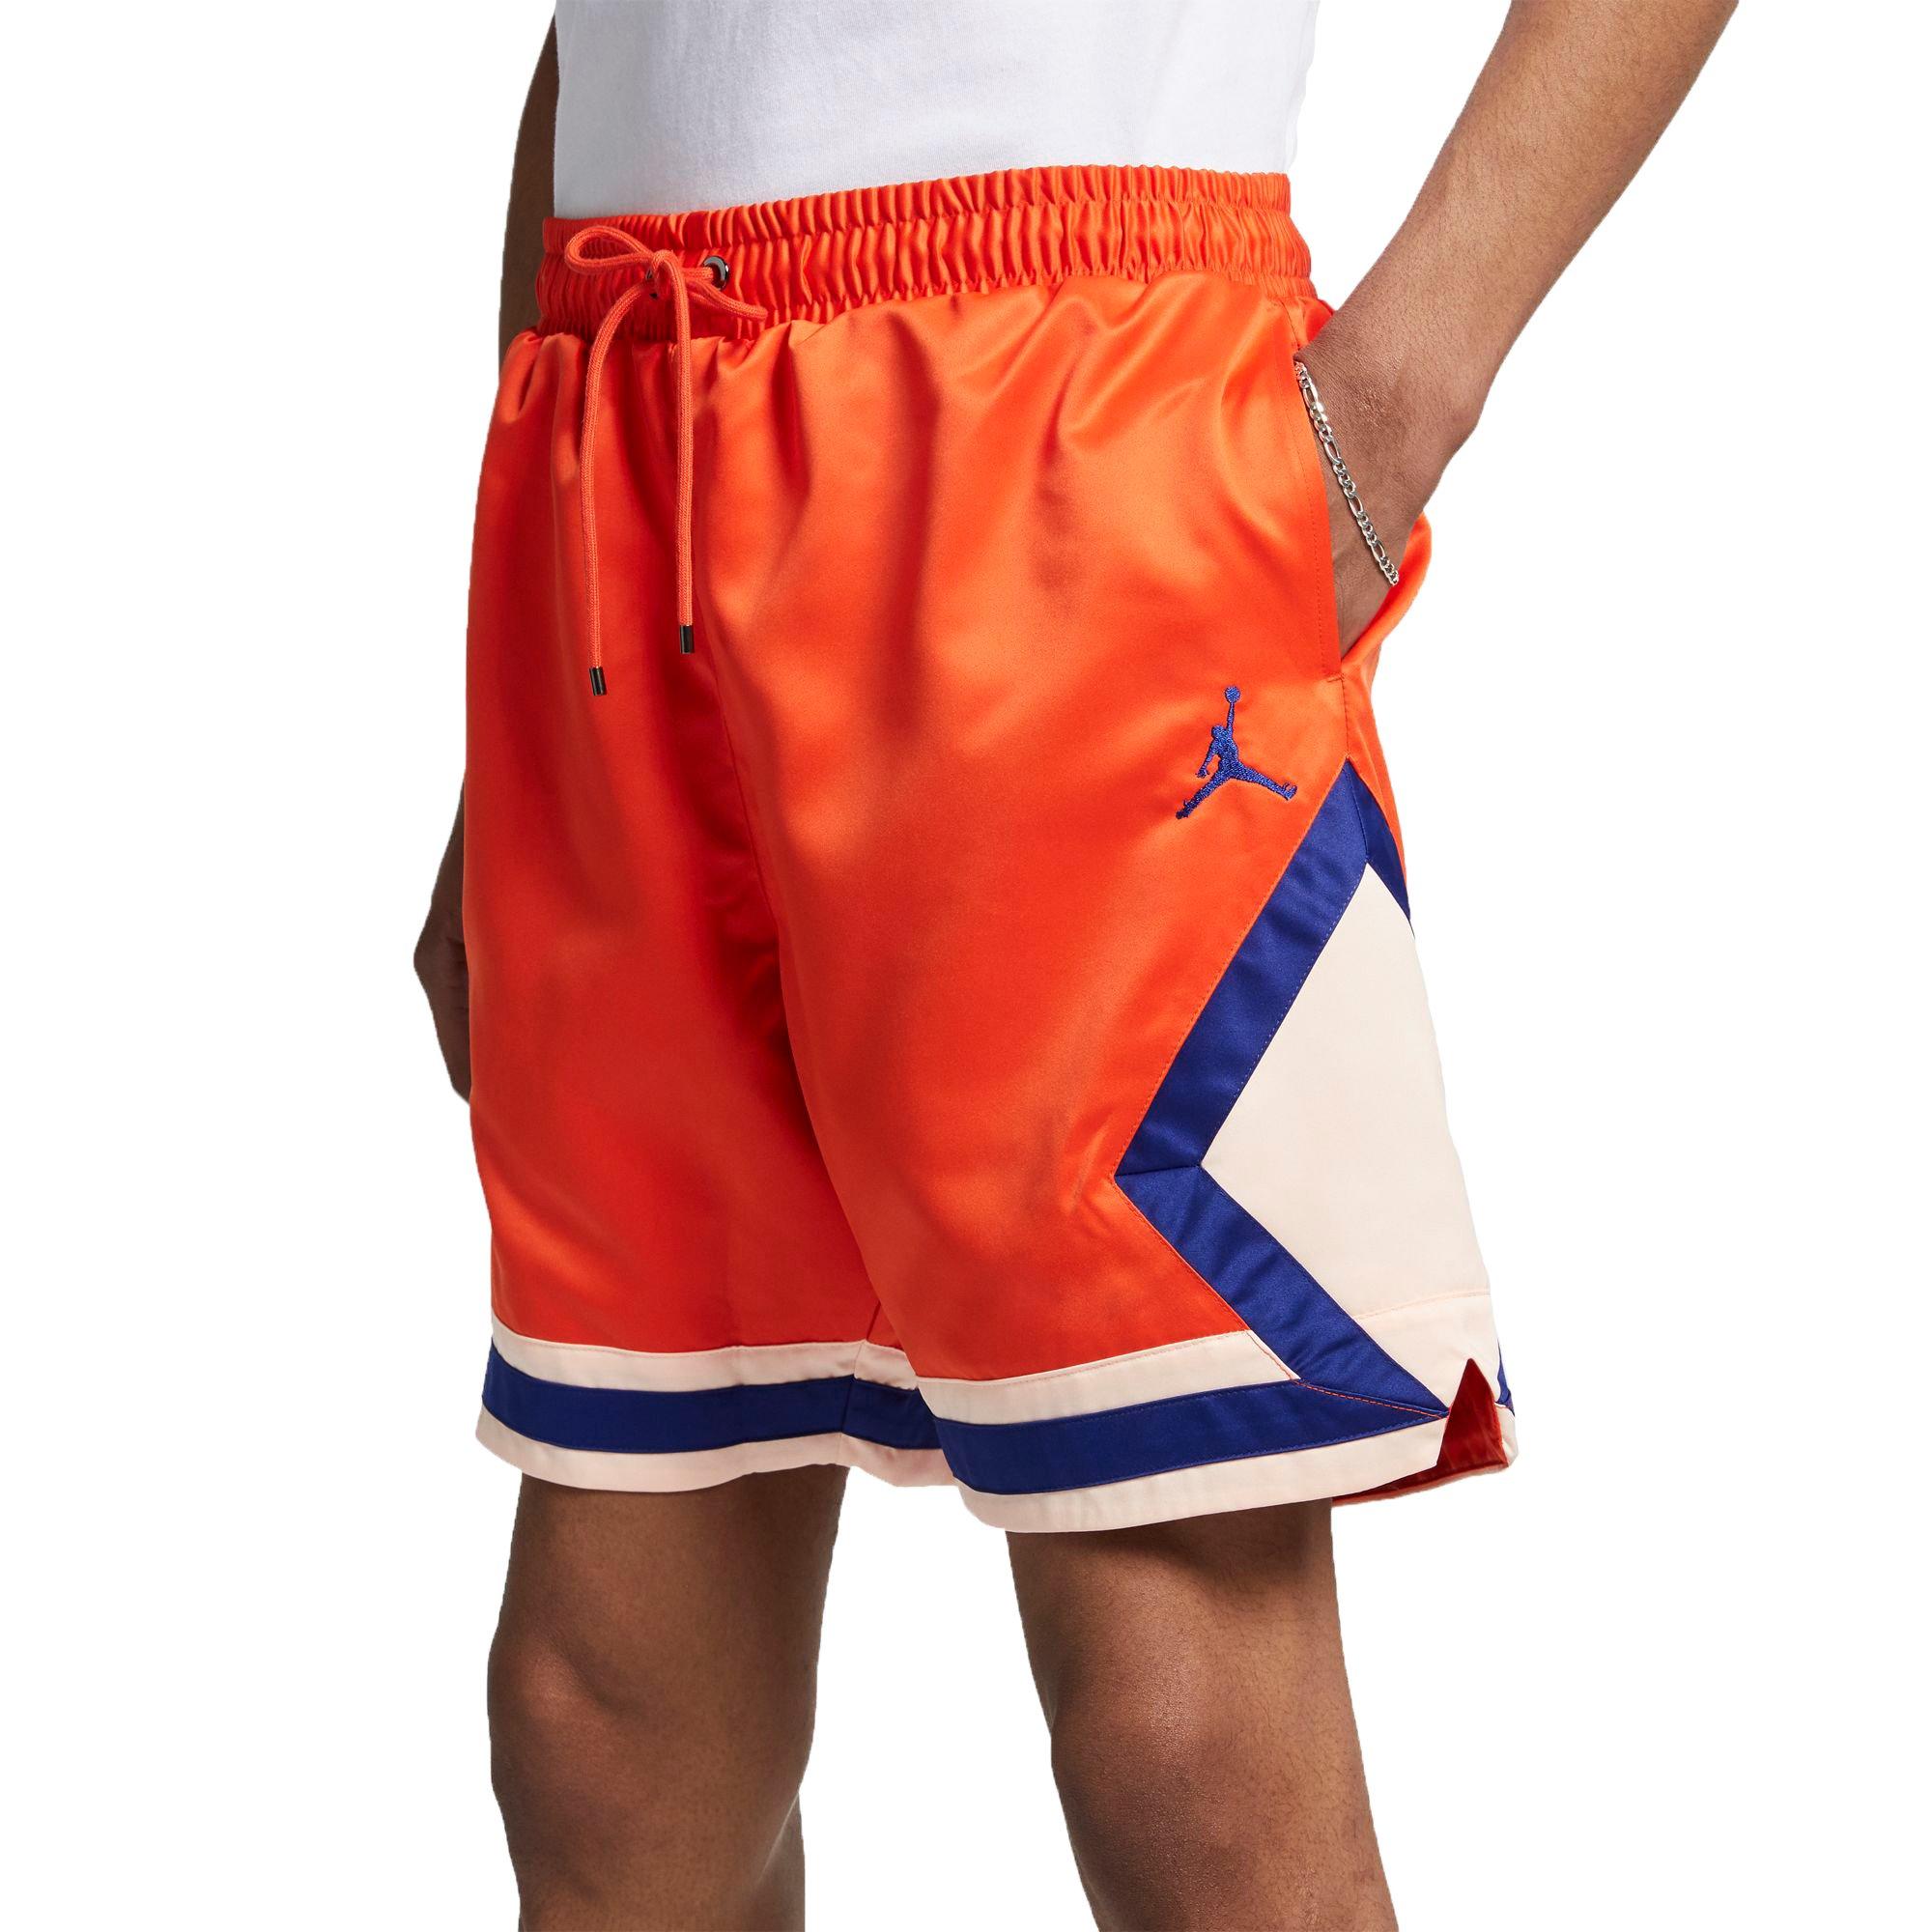 Satin Diamond Shorts - Orange/Royal 